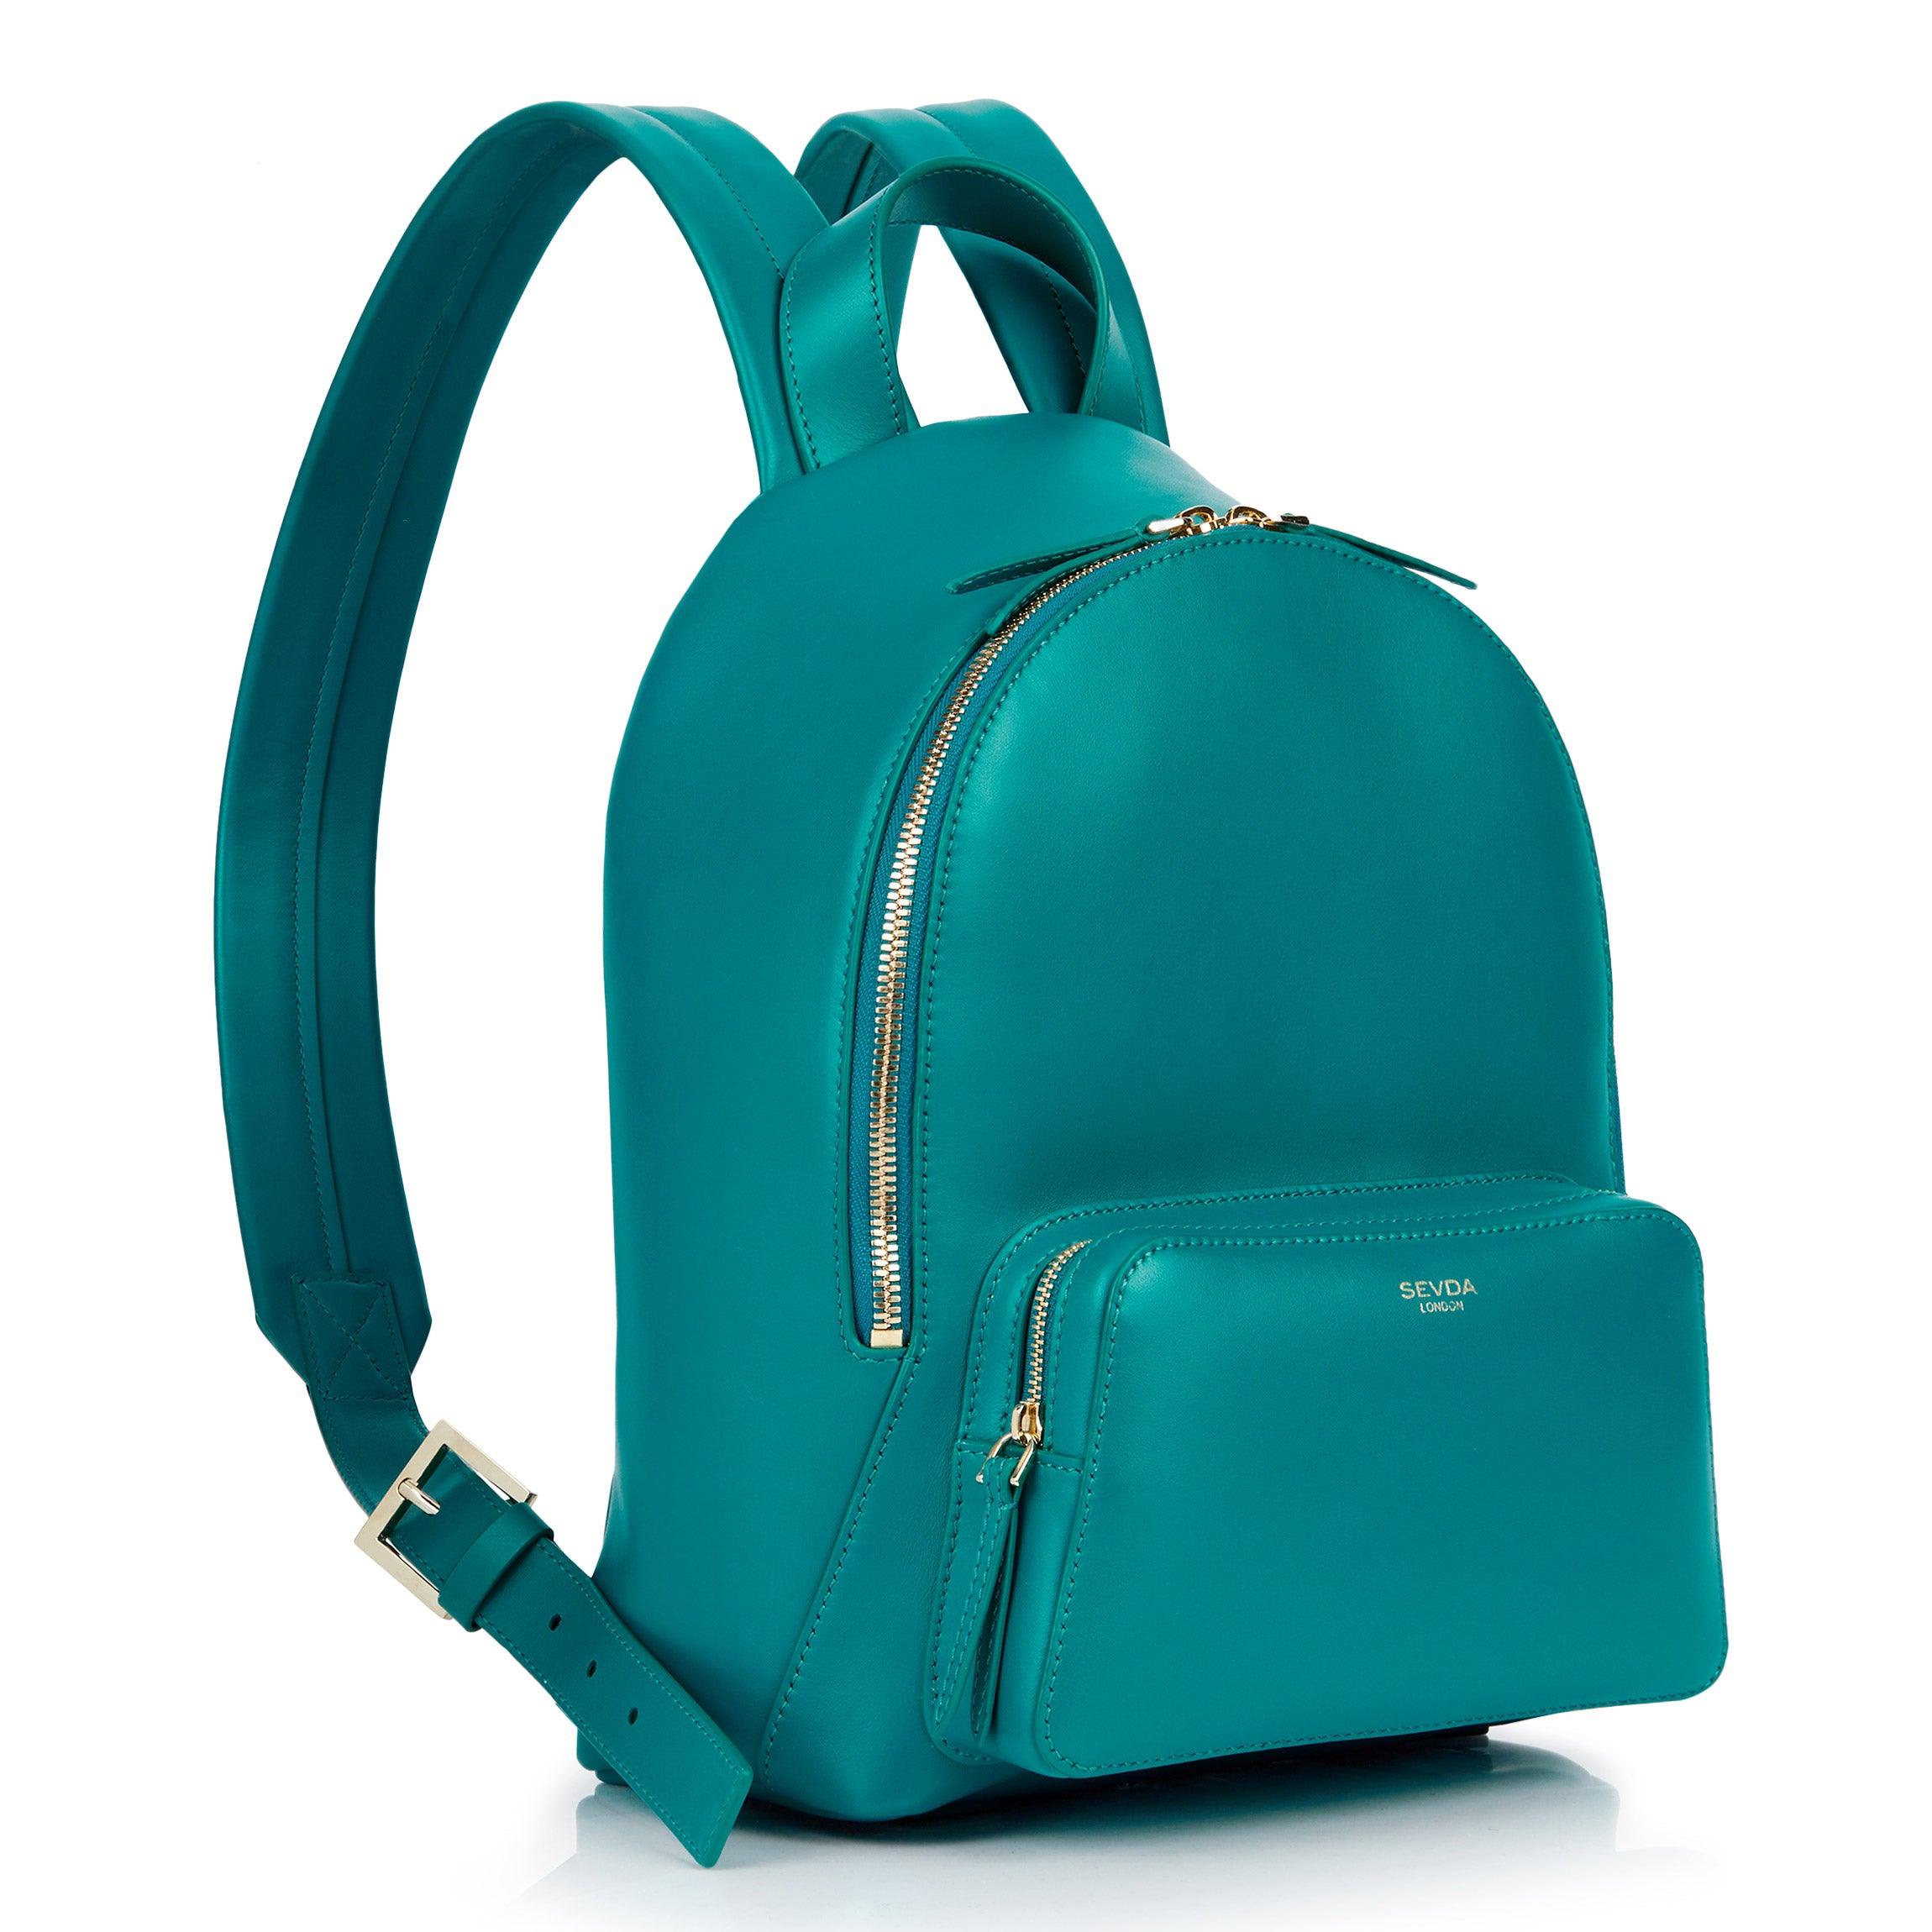 Emerald Green Designer Backpack - Where London's fashion meets Italian craftsmanship.